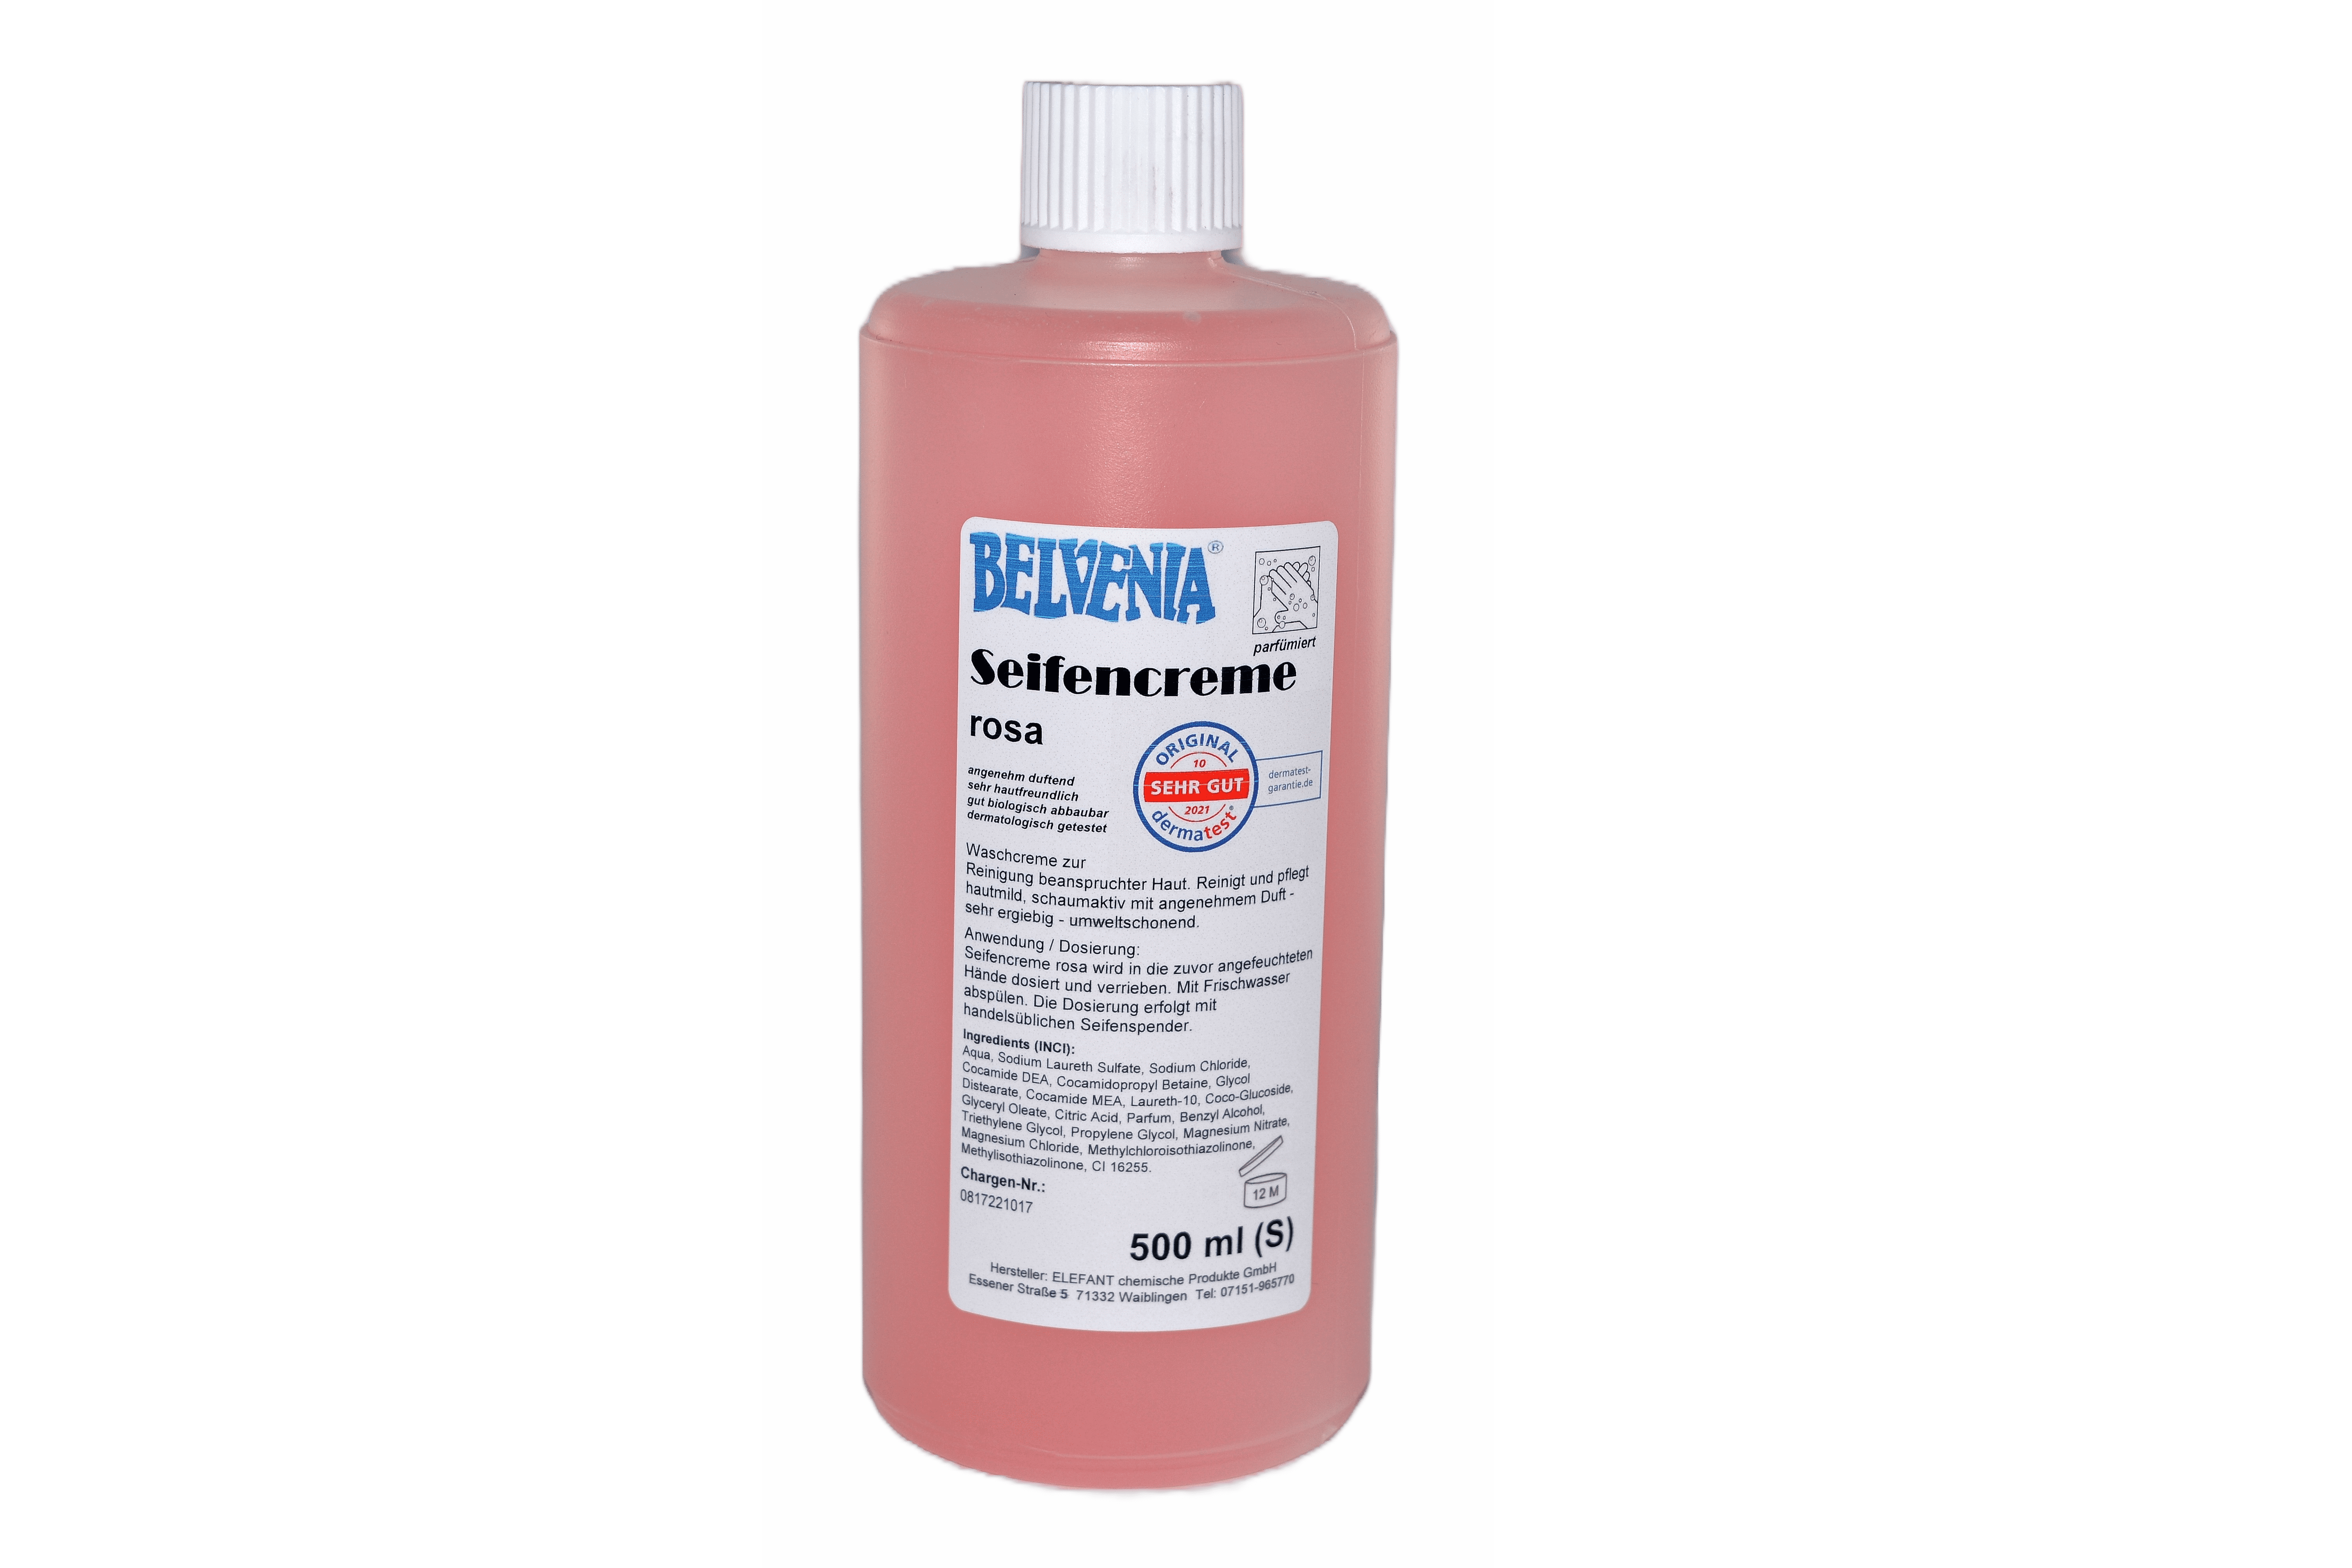 BELVENIA-Cremeseife rosa 500 ml Spenderflasche (S) Karton mit 12x500 ml